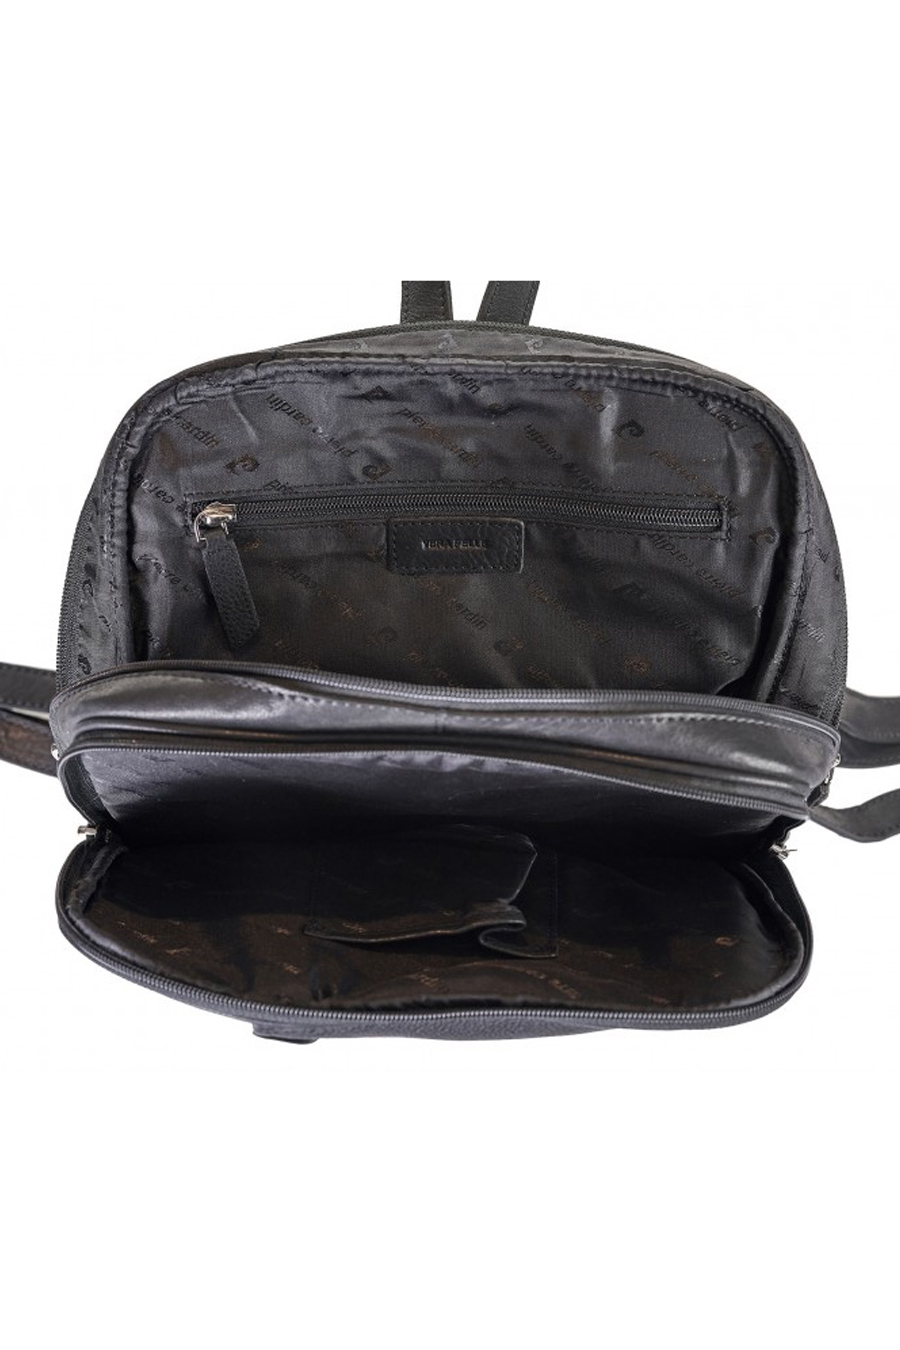 Backpack PIERRE CARDIN 28011-YS12-NERO-COGNAC